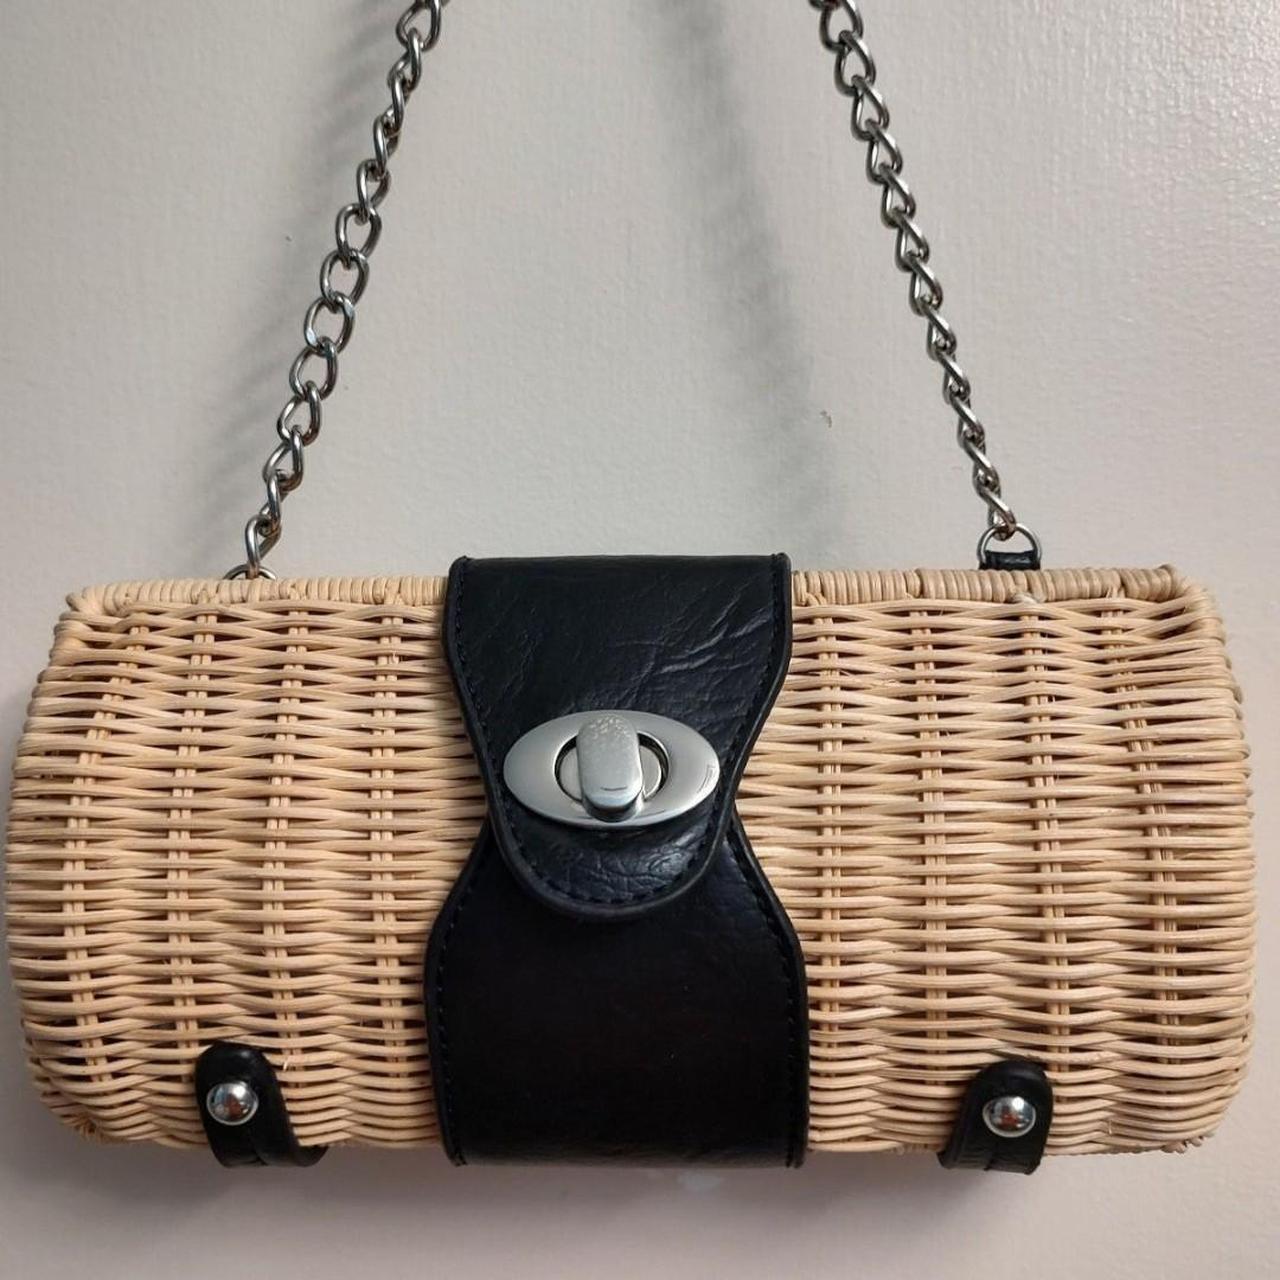 Cole Hann black barrel purse | Leather satchel handbags, Suede tote bag,  Black leather handbags